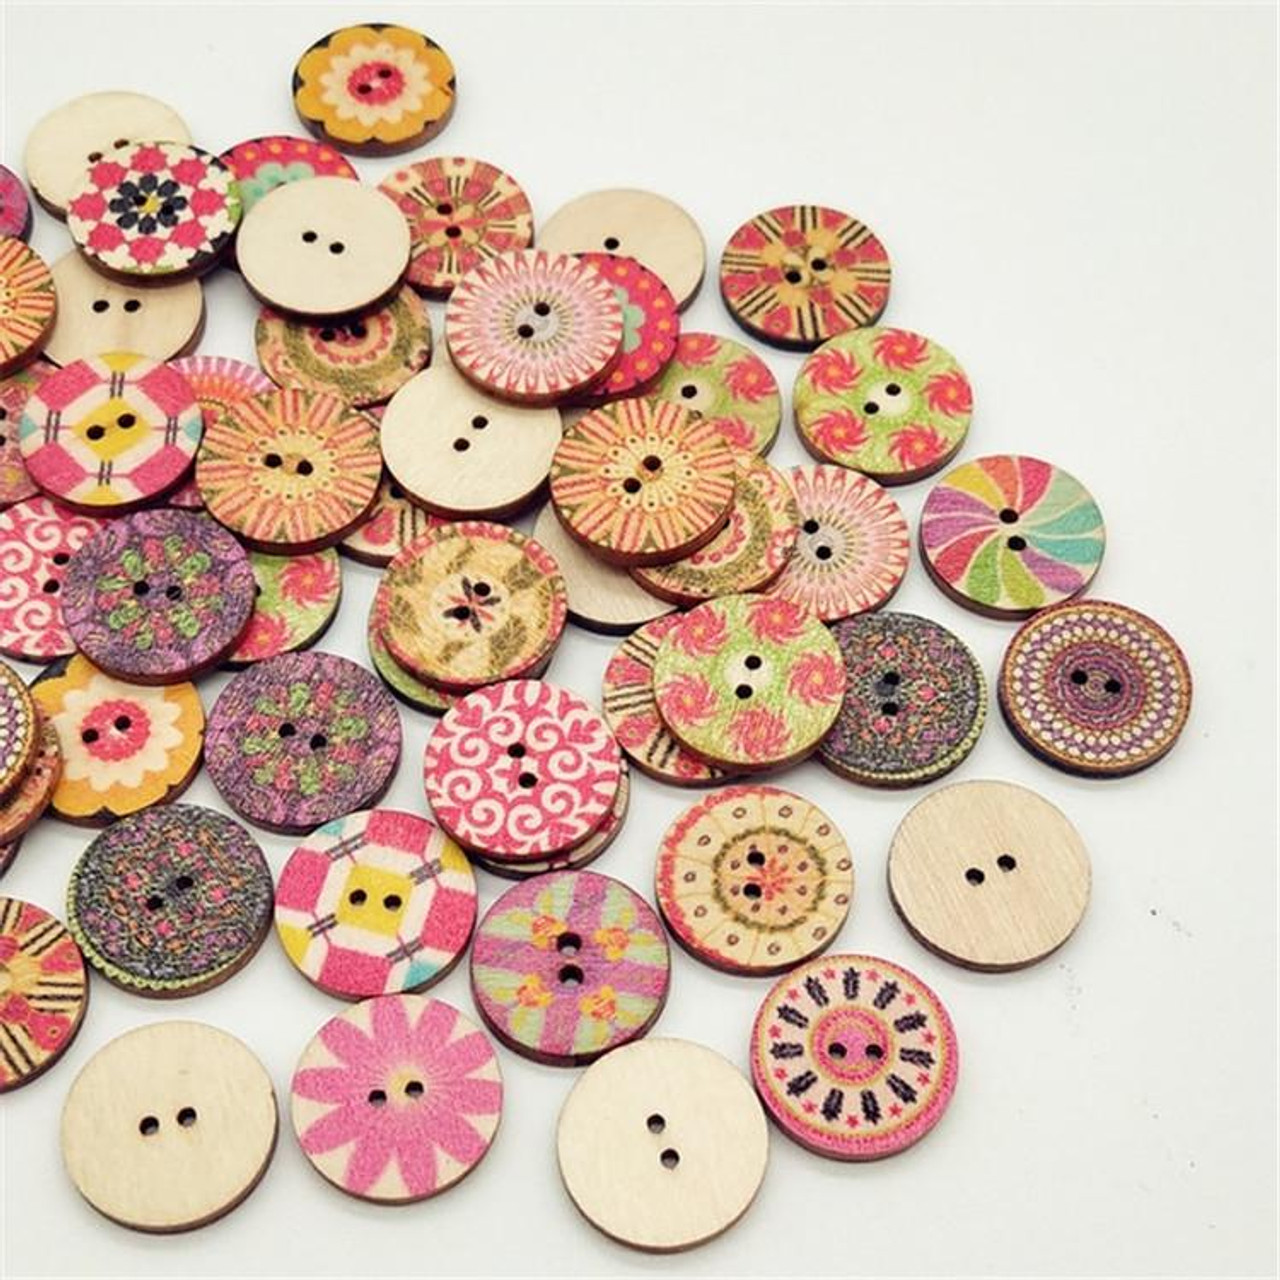  Buttons for Crafts 100pcs, 25mm Mixed Wooden Cartoon